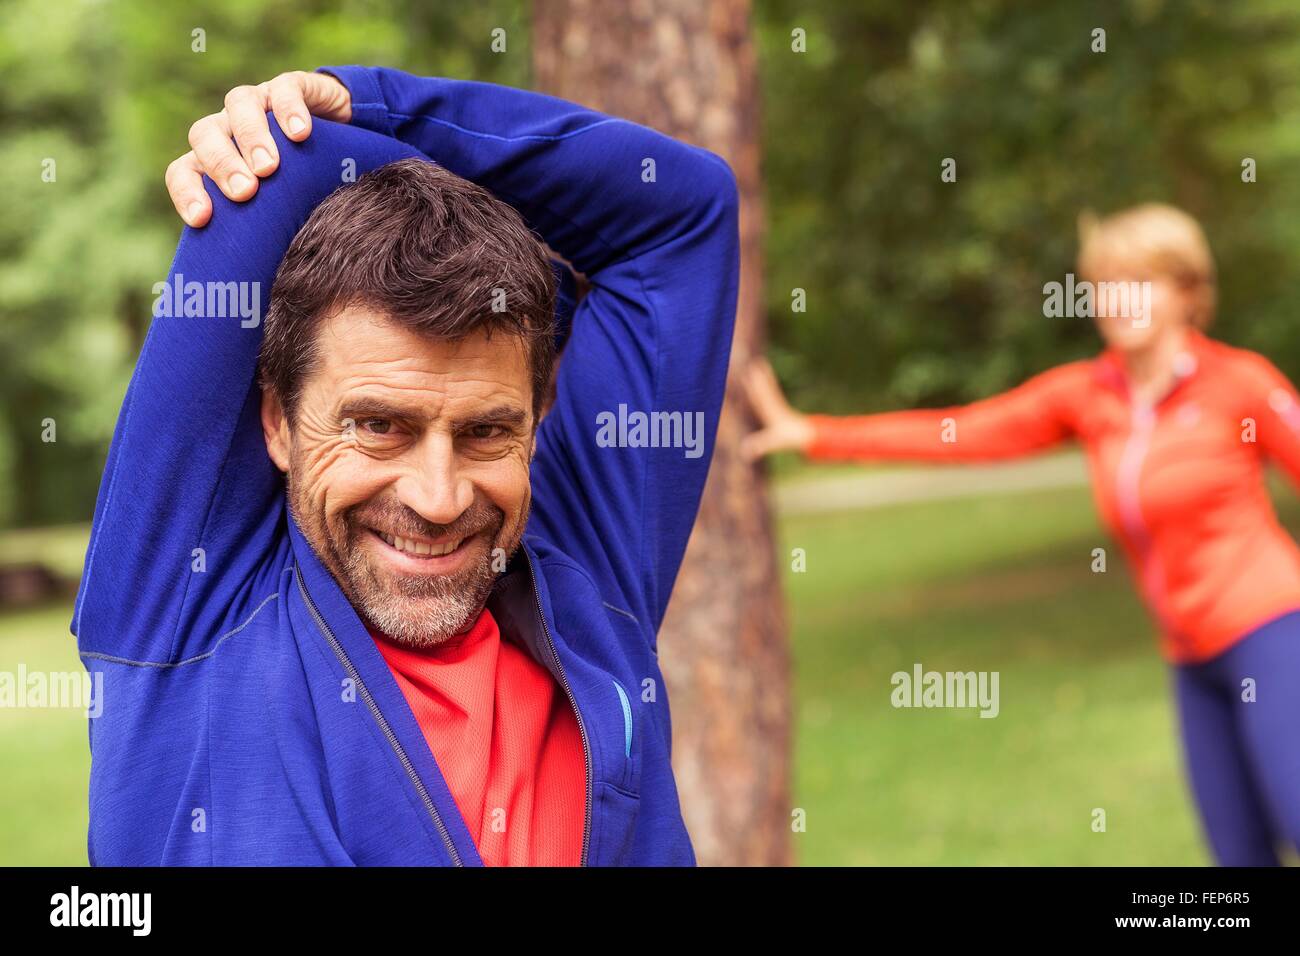 Couple exercising, stretching, outdoors Stock Photo